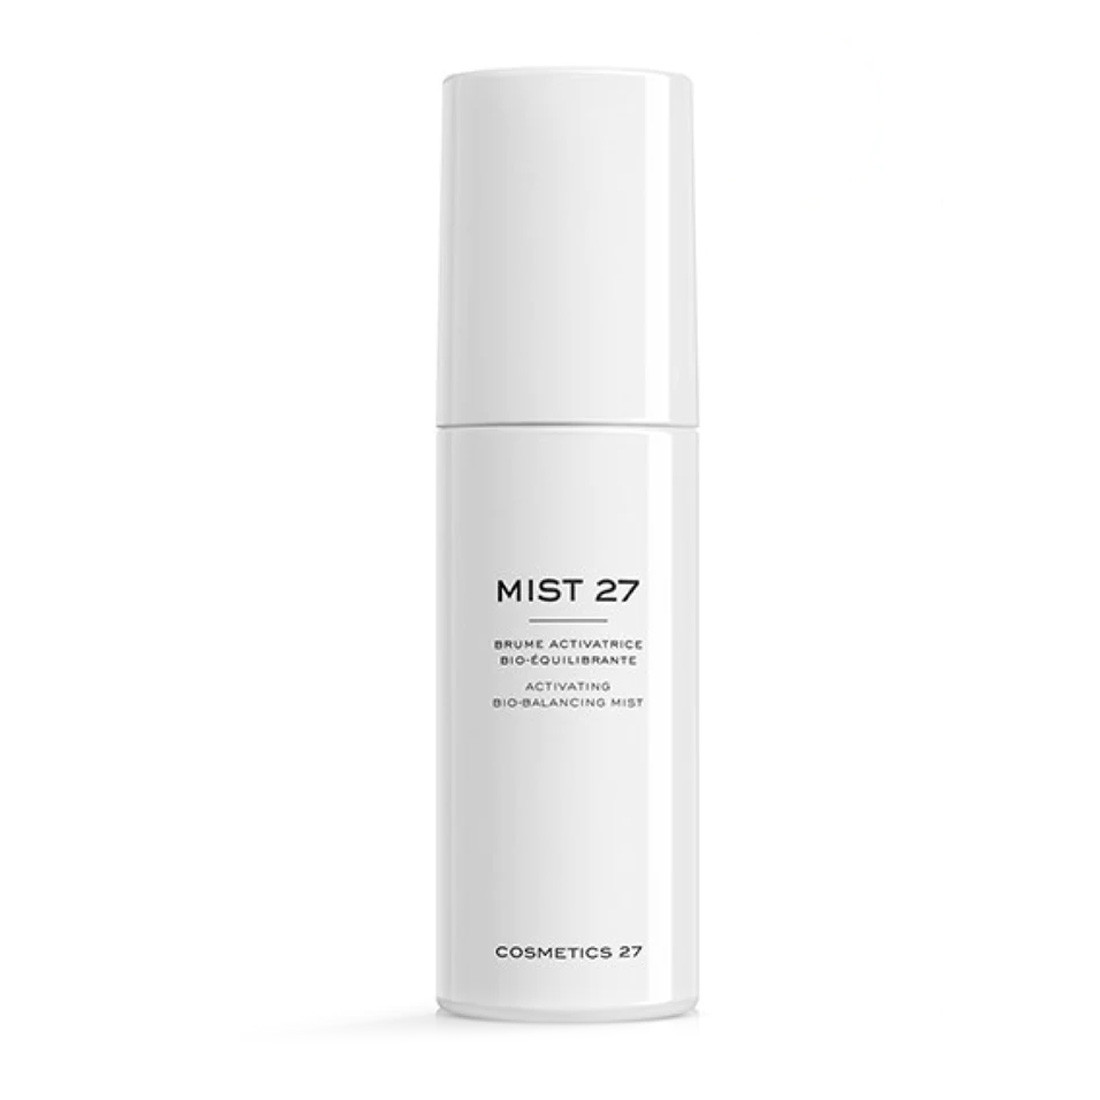 Cosmetics 27 Activating Bio-Balancing Mist 27 - Биотоник-активатор в формате легкого спрея